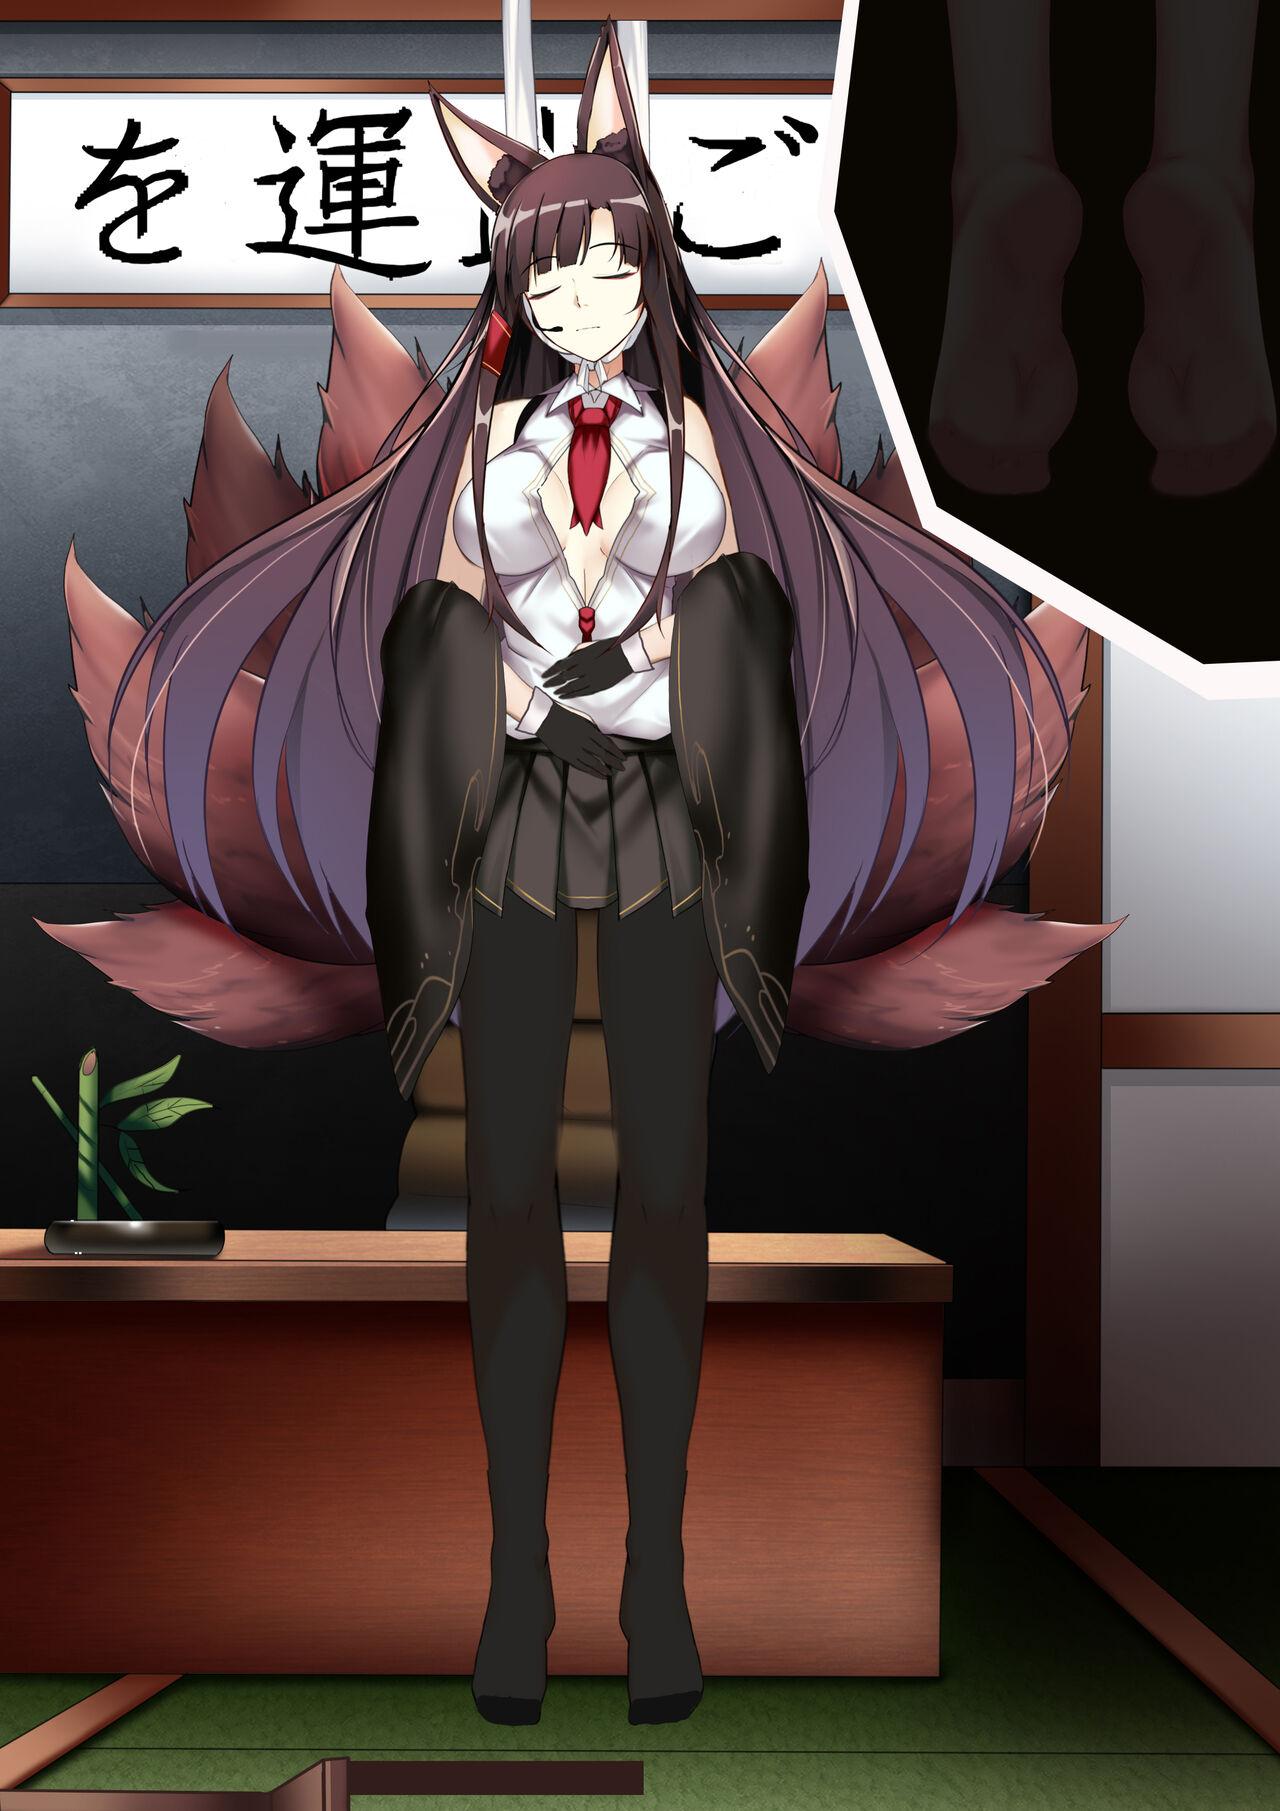 Akagi hanged herself in her office 32